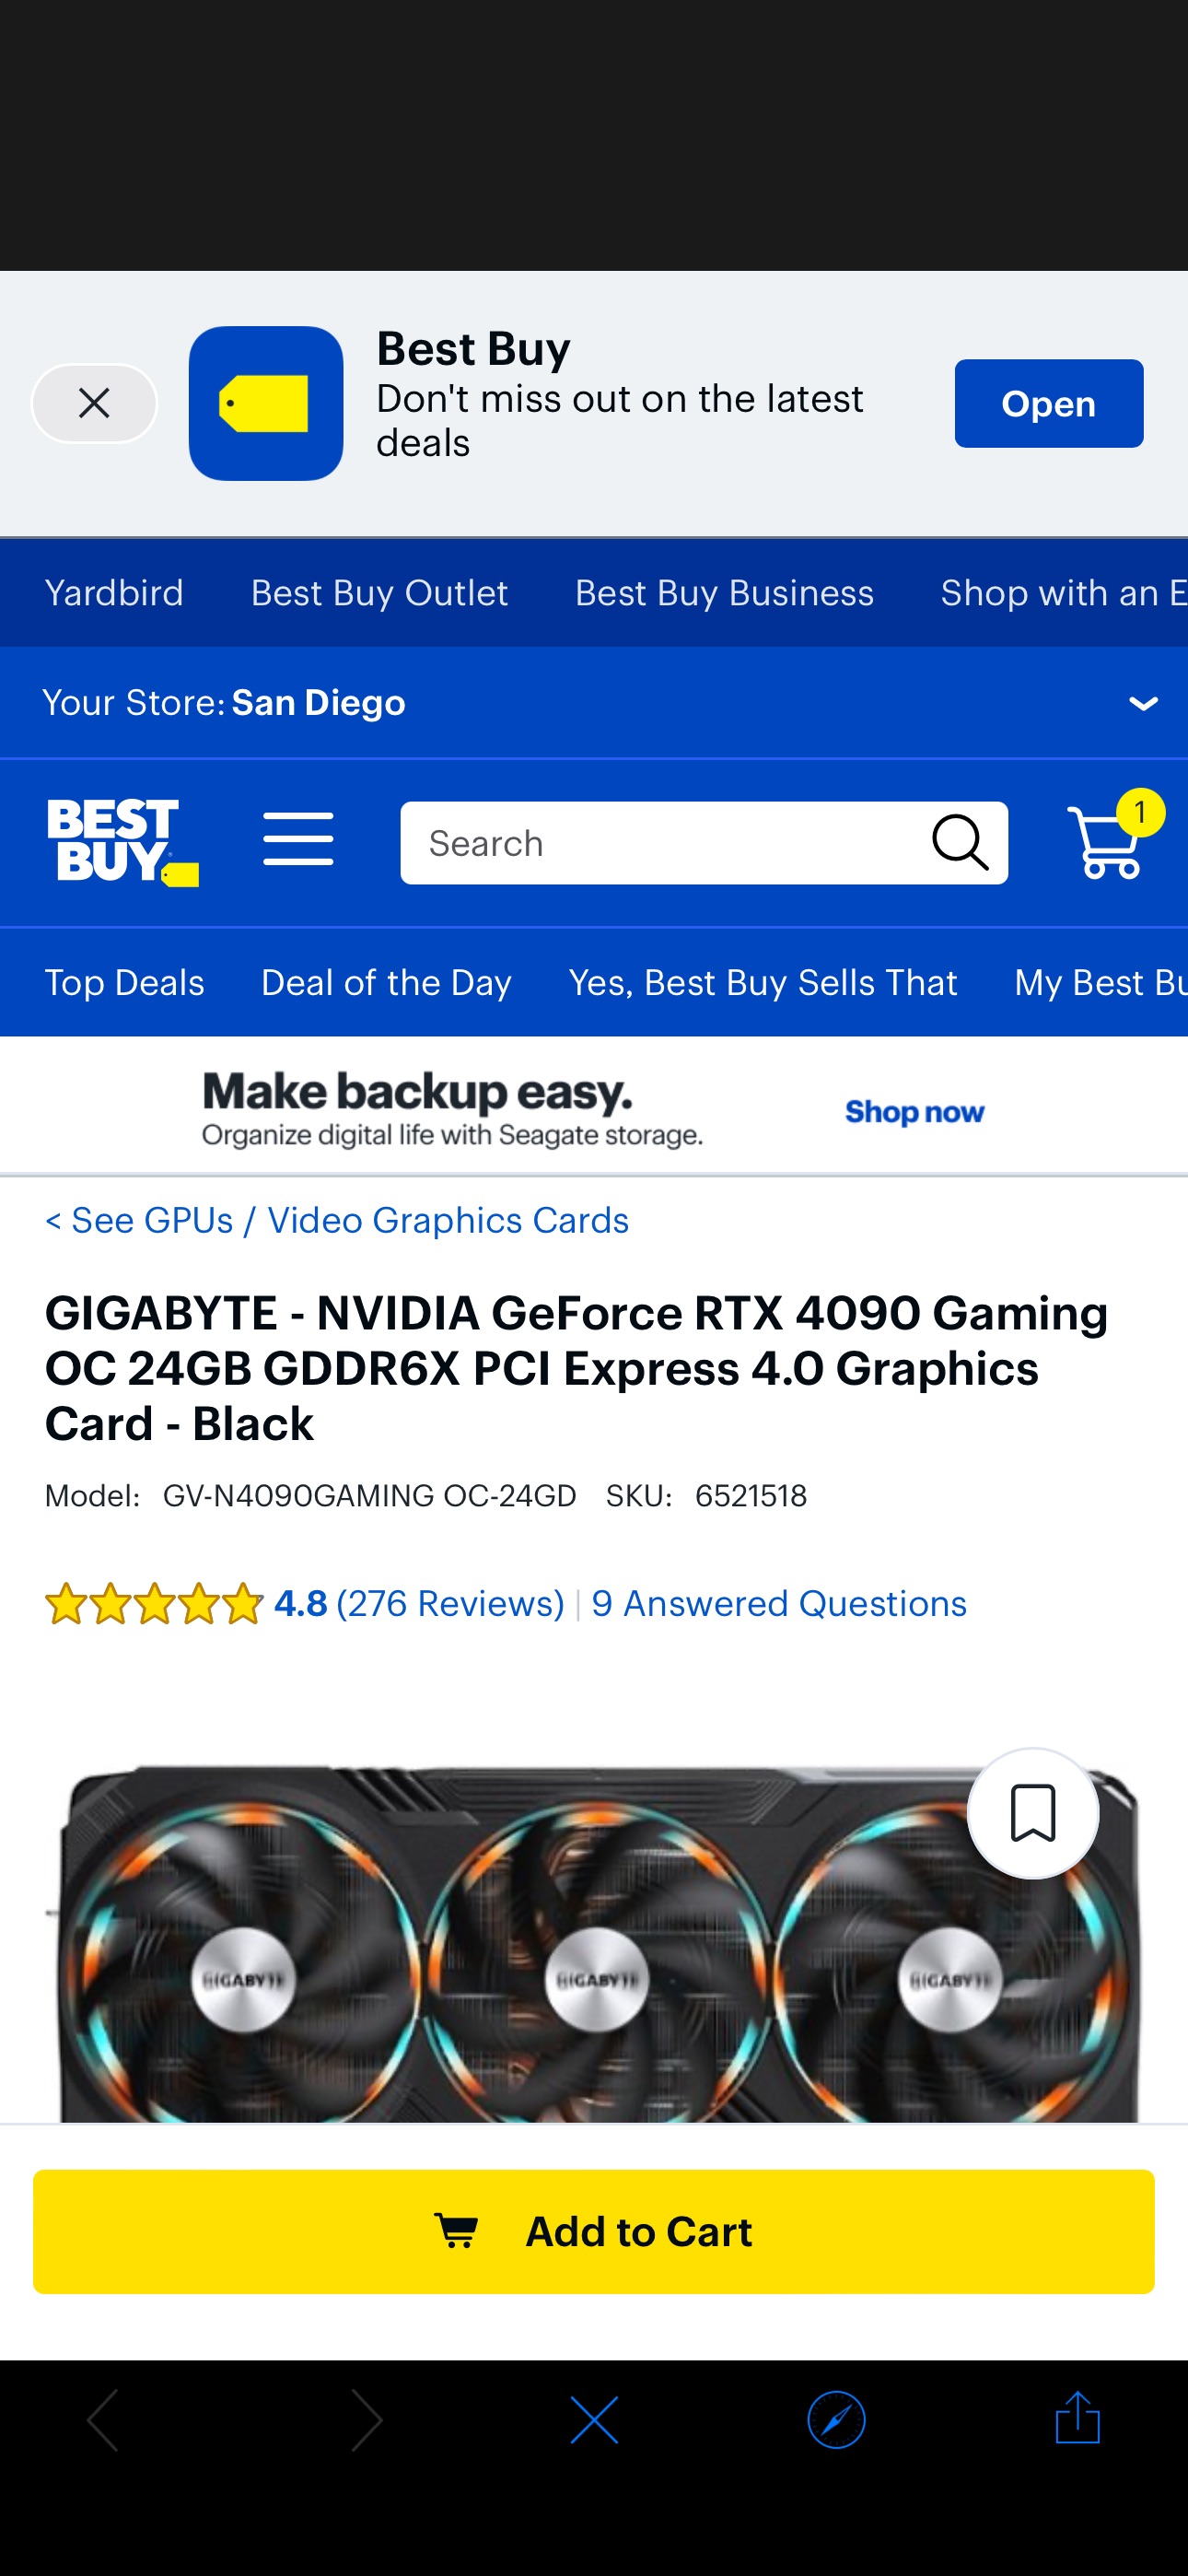 GIGABYTE NVIDIA GeForce RTX 4090 Gaming OC 24GB GDDR6X PCI Express 4.0 Graphics Card Black GV-N4090GAMING OC-24GD - Best Buy